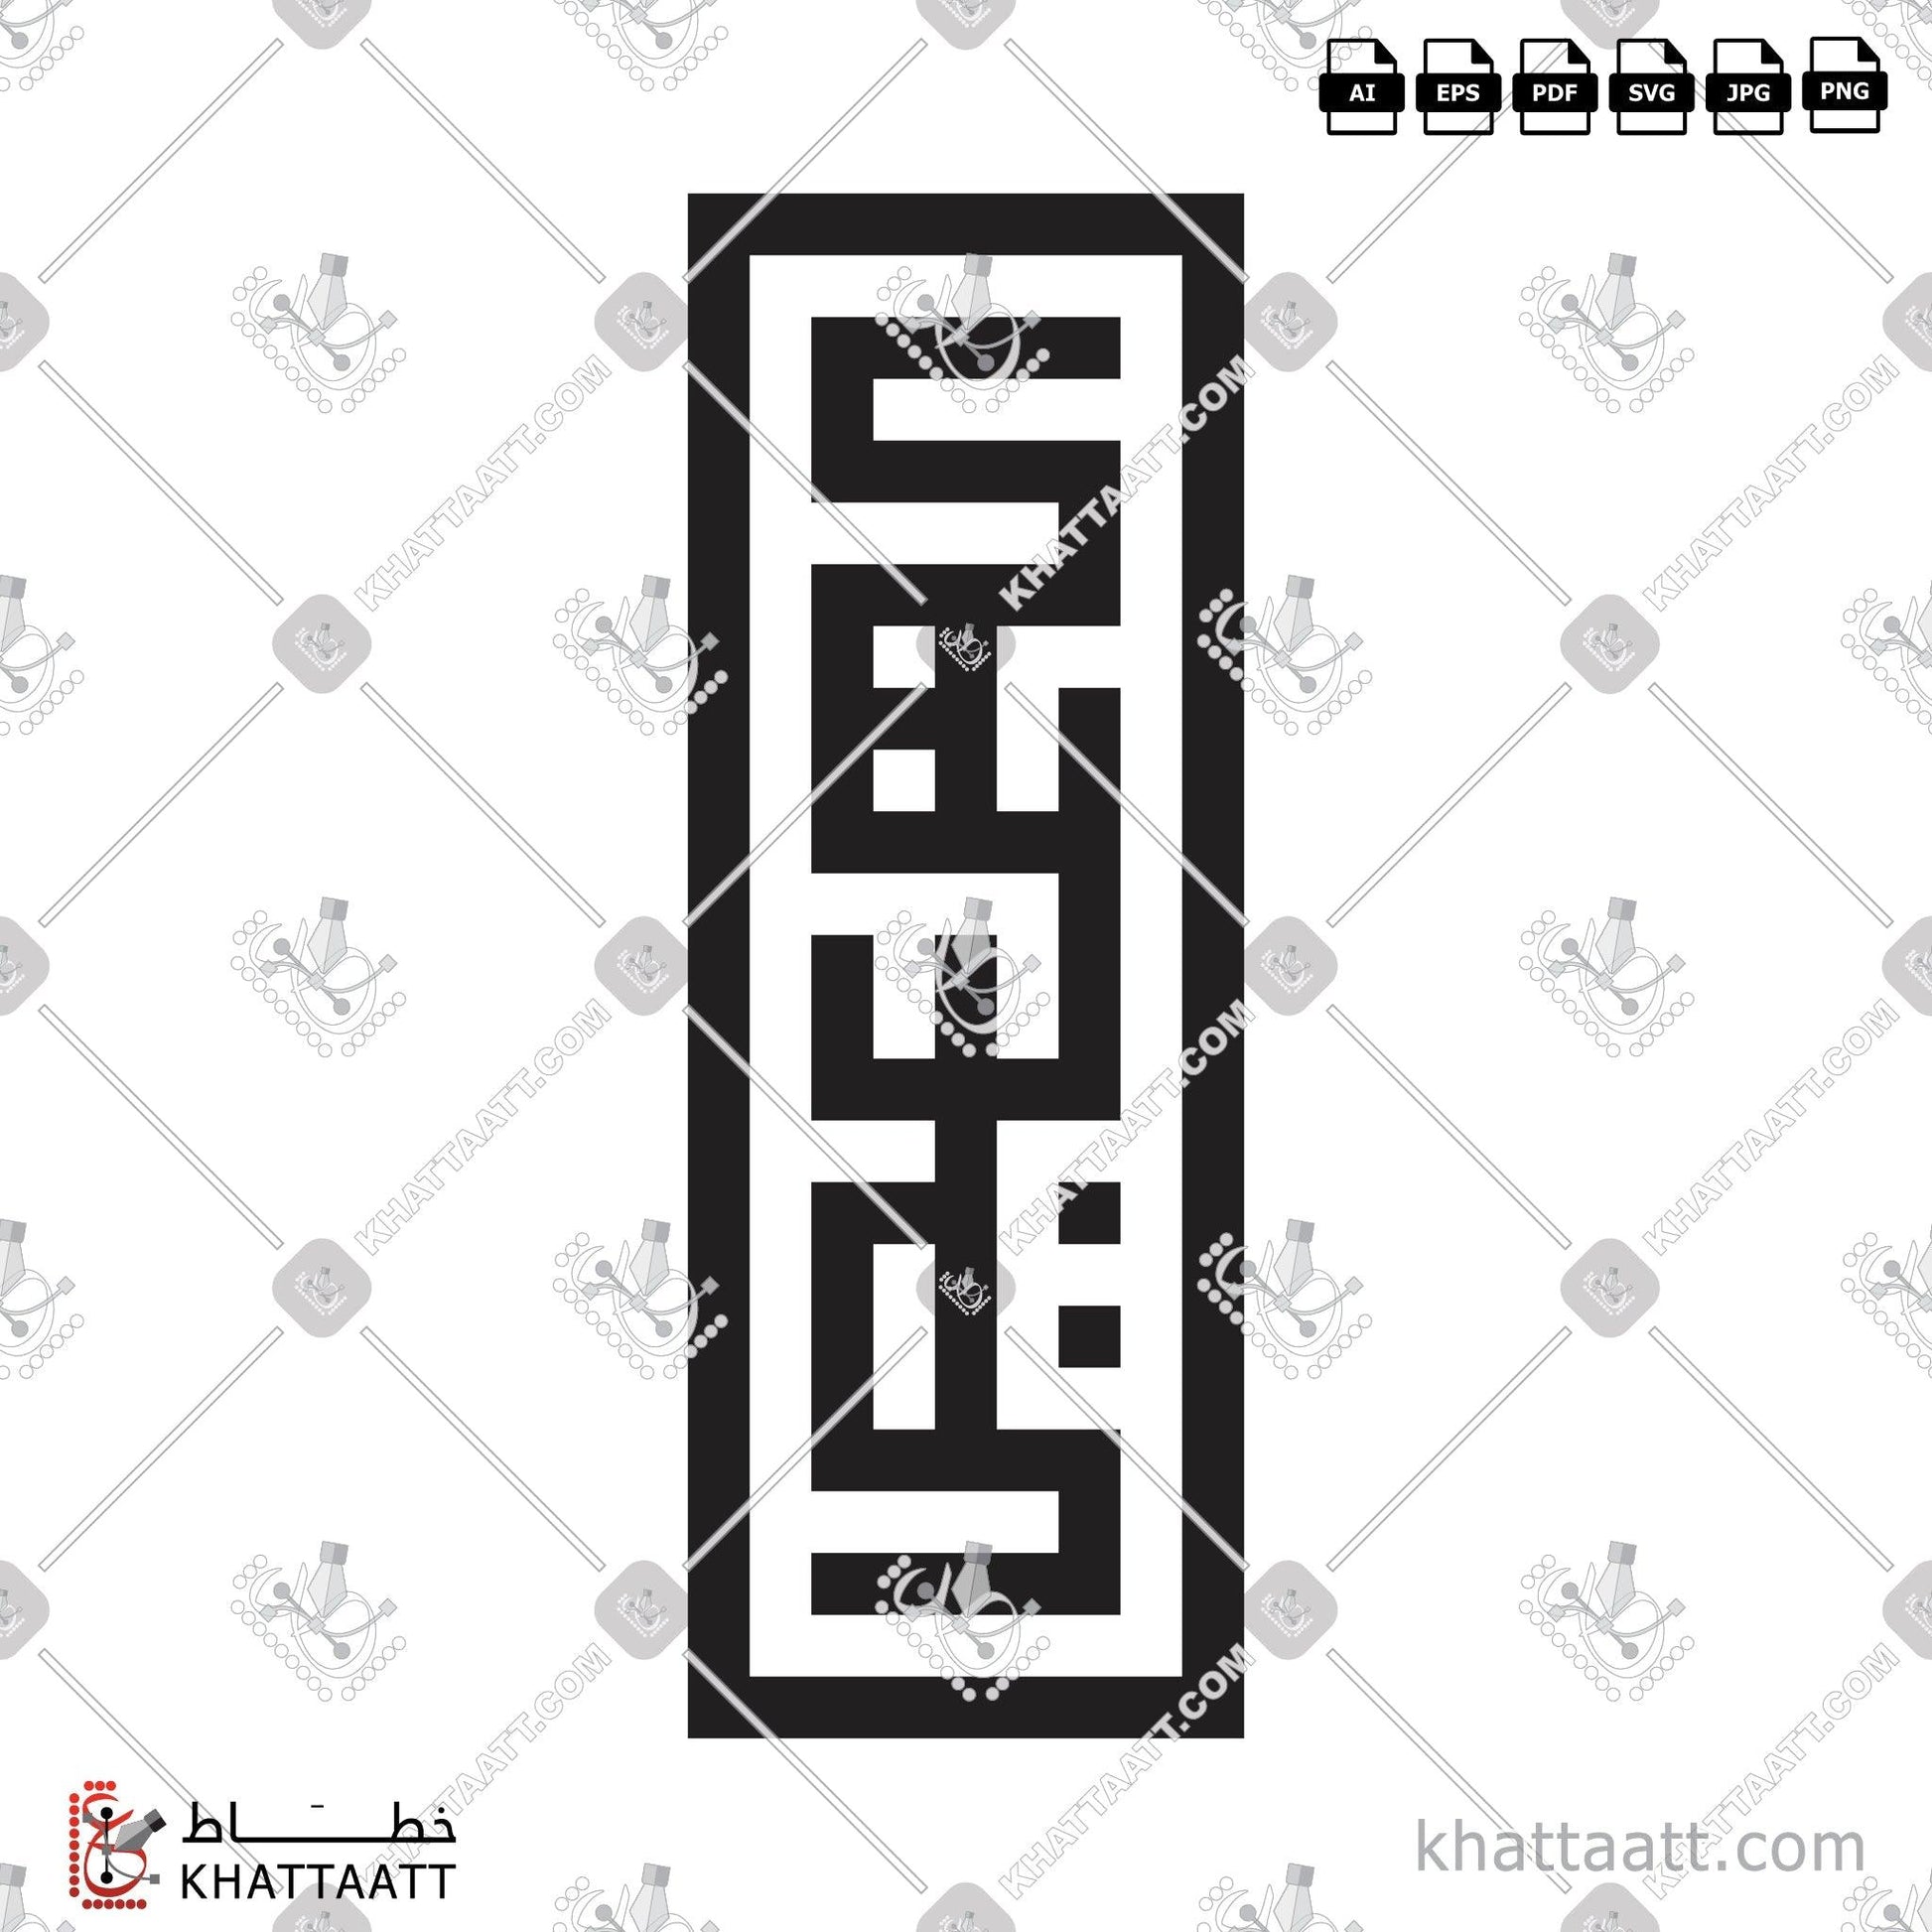 Download Arabic Calligraphy of Kaf Ha Ya Ayn Sad - كهيعص in Kufi - الخط الكوفي in vector and .png